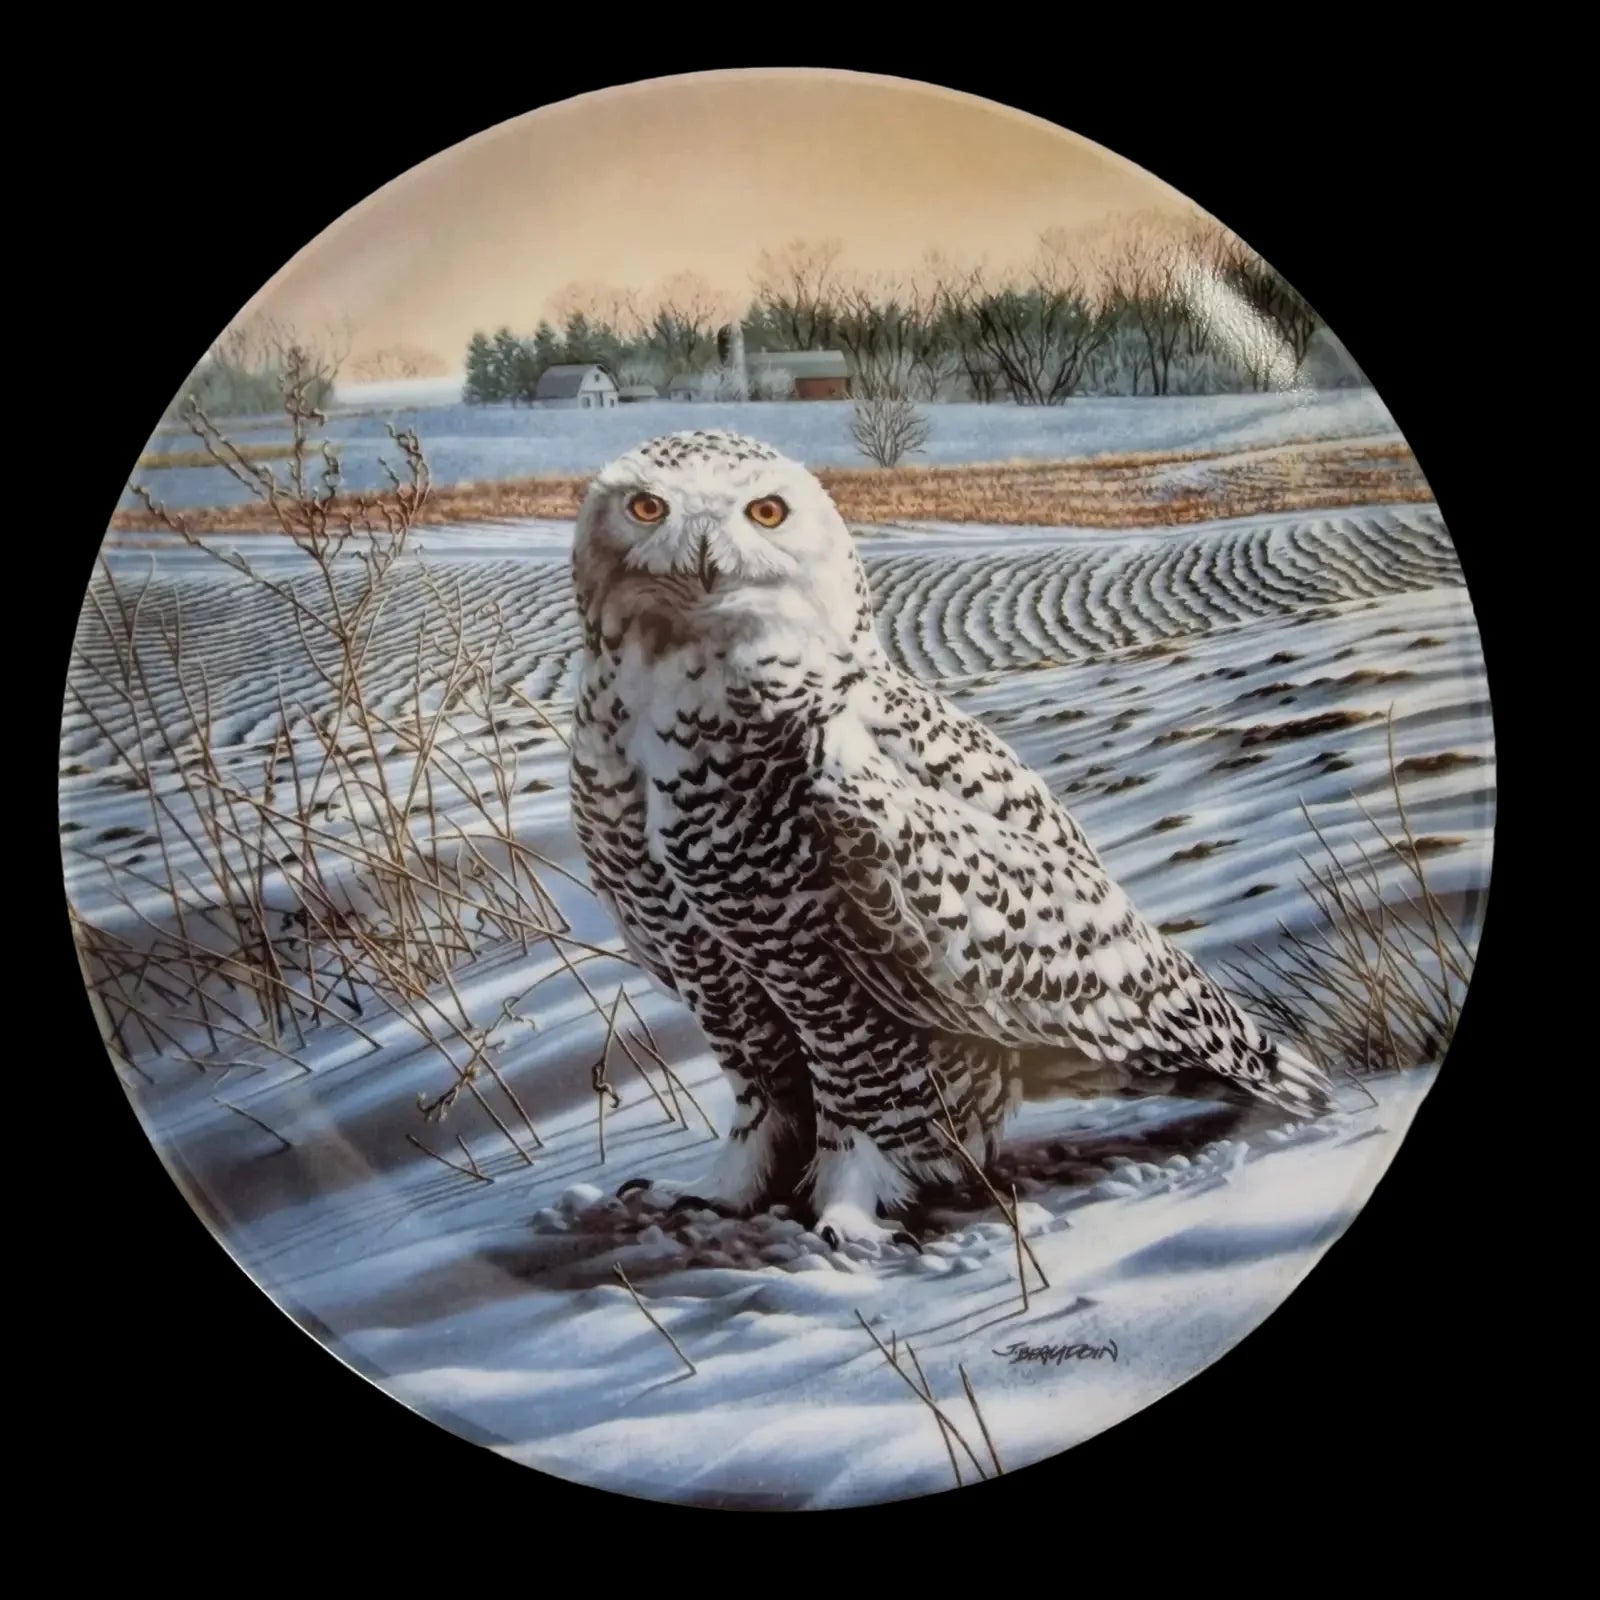 Knowles The Snowy Owl Ornamental Plate - 1 - 3032